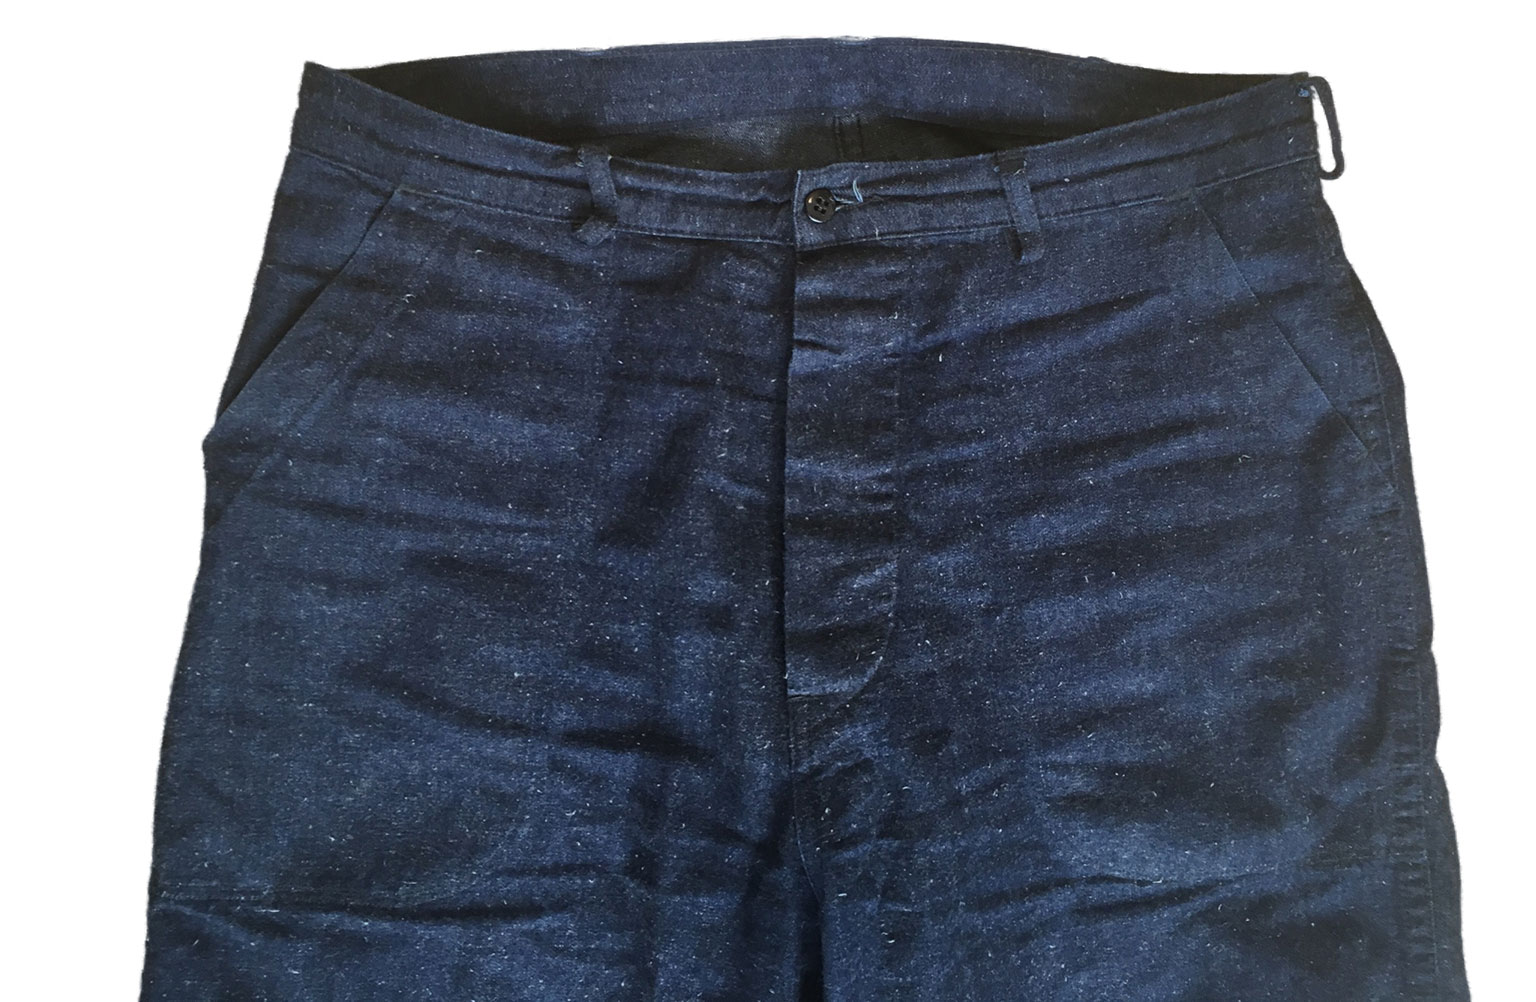 TCB Seamens Trousers - Indigo Veins - A blog about denim